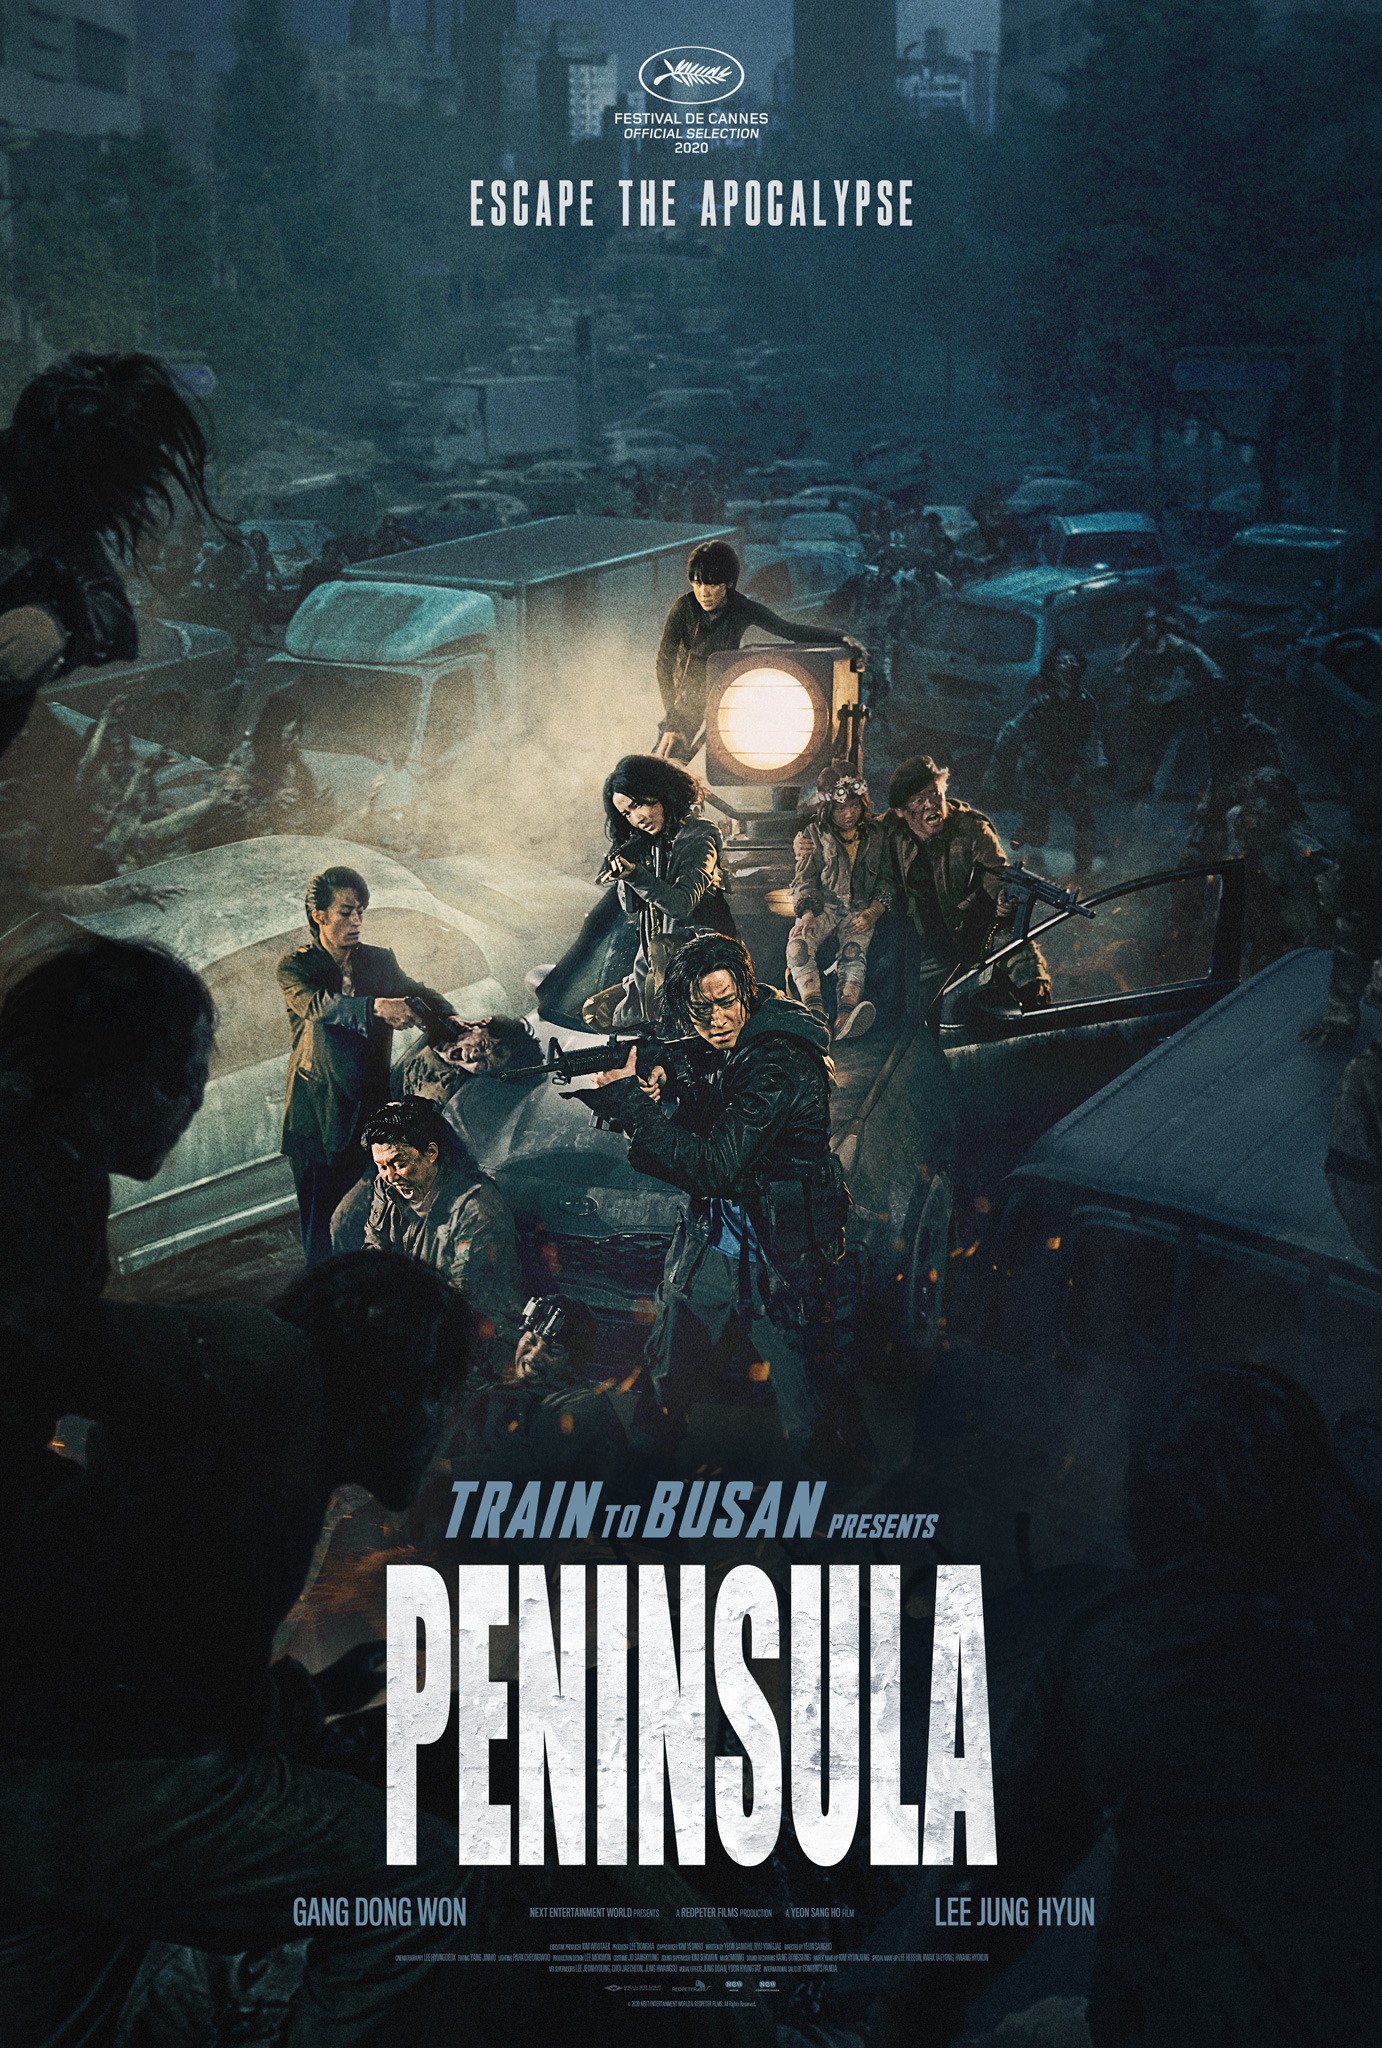 Train To Busan Presents Peninsula affiche film